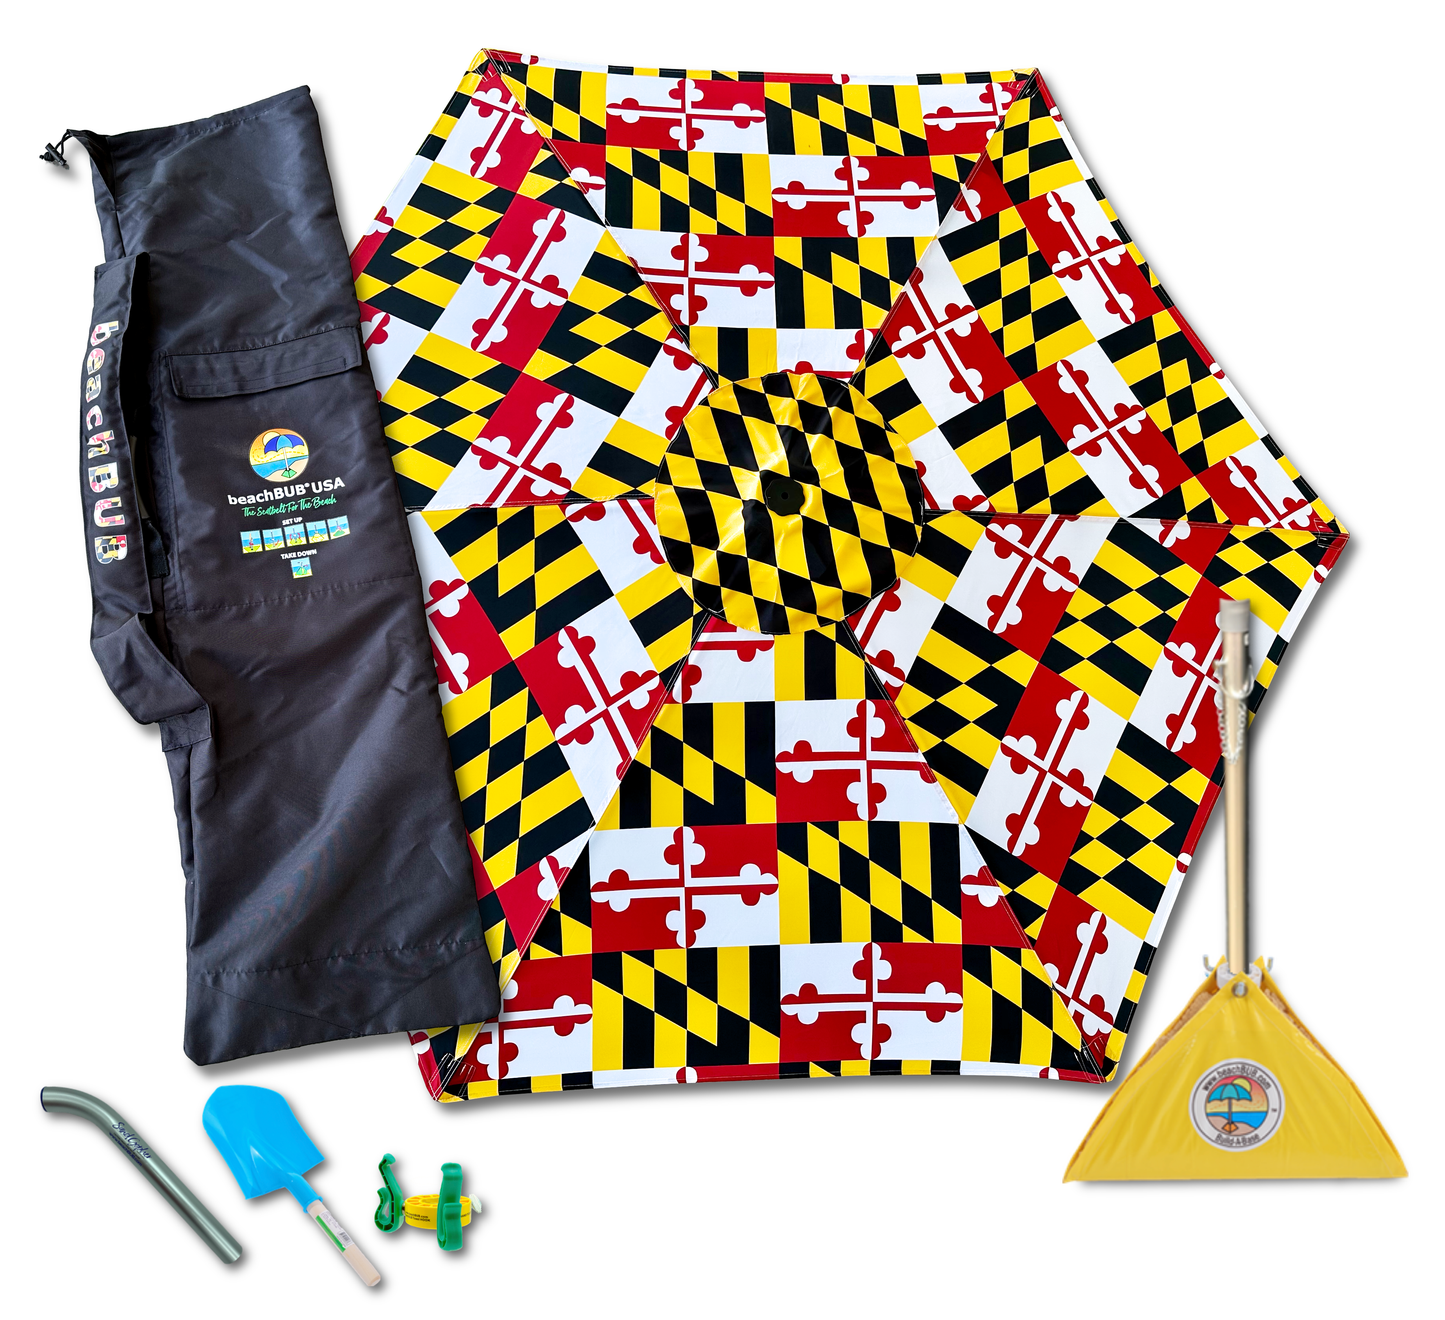 beachBUB® All-In-One Beach Umbrella System - Maryland Flag Version (Limited Supply)